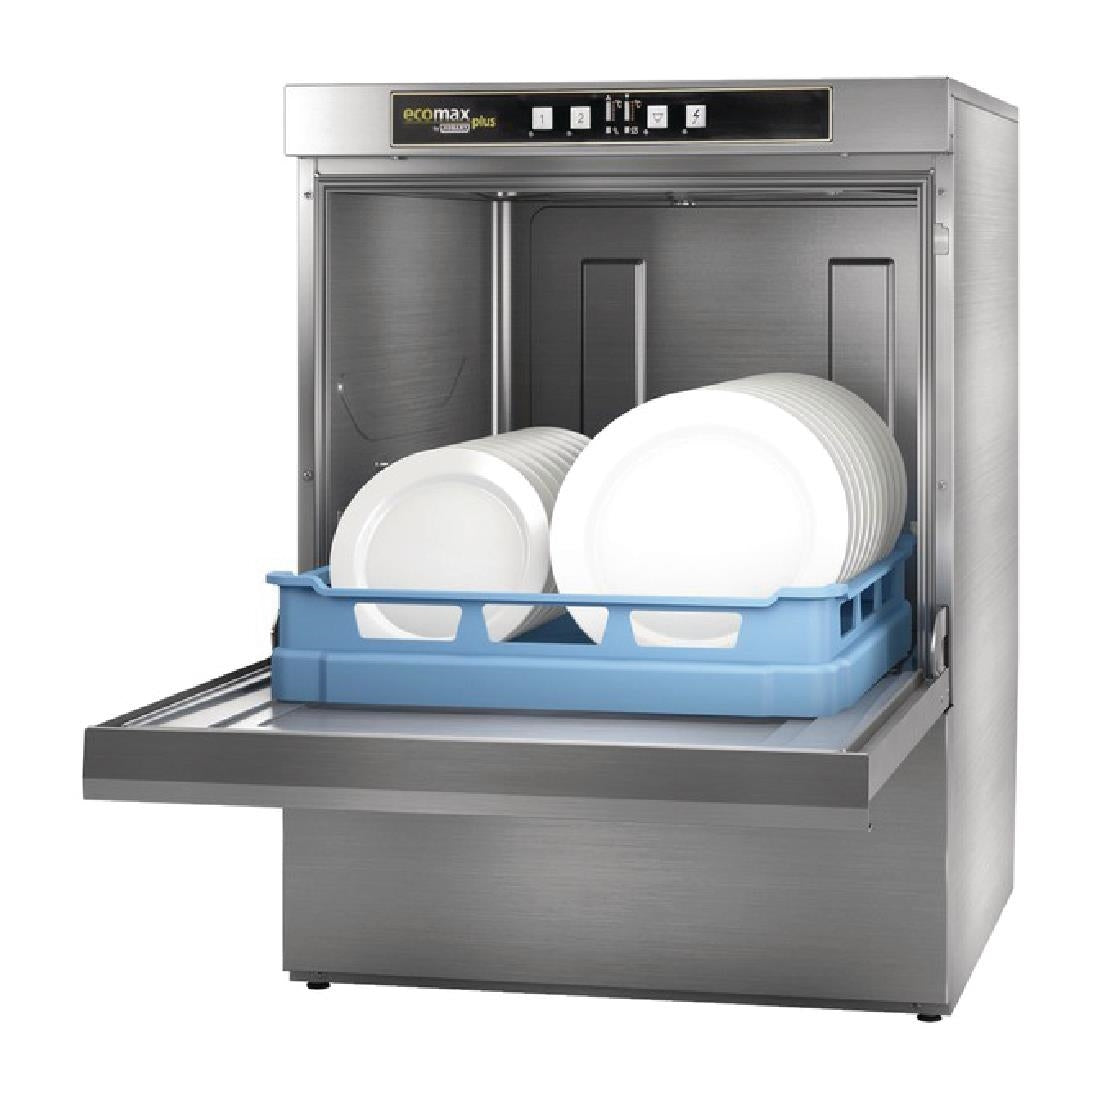 Hobart Ecomax Plus Dishwasher F503 Machine Only